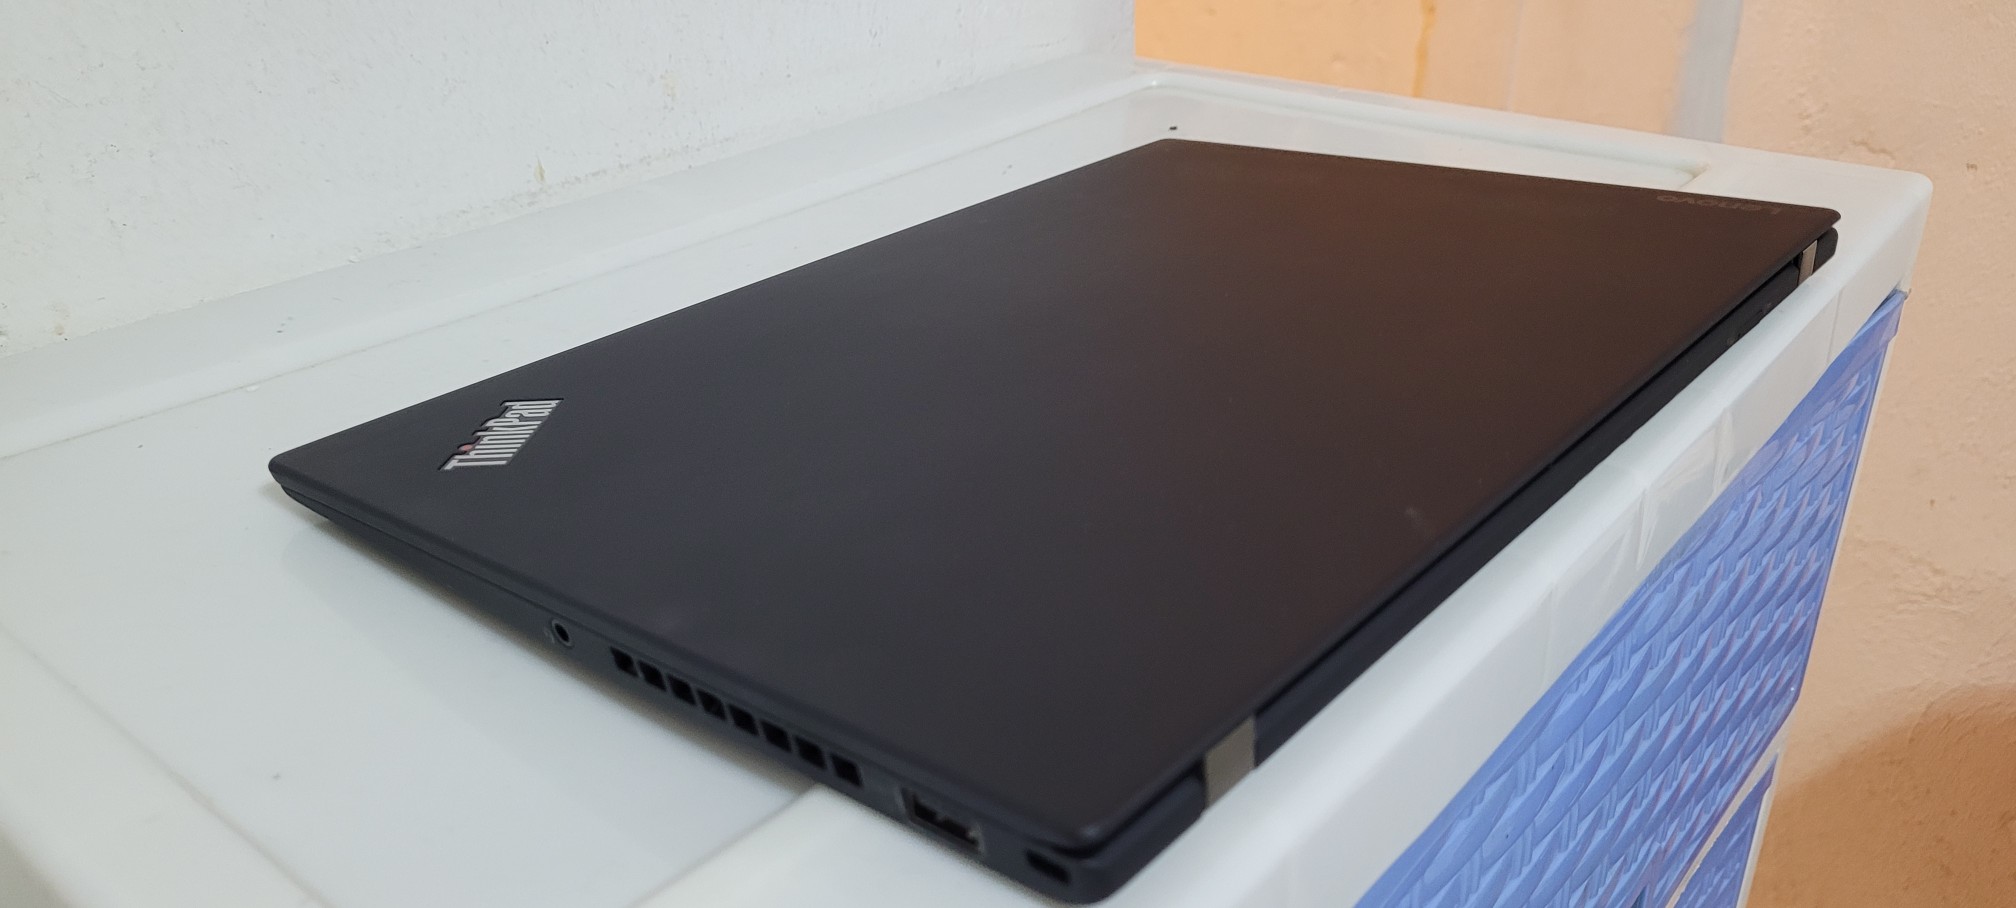 computadoras y laptops - Lenovo Slim Touch 14 Pulg Core i7 Ram 12gb ddr4 Disco m2 256gb full Video 6gb 2